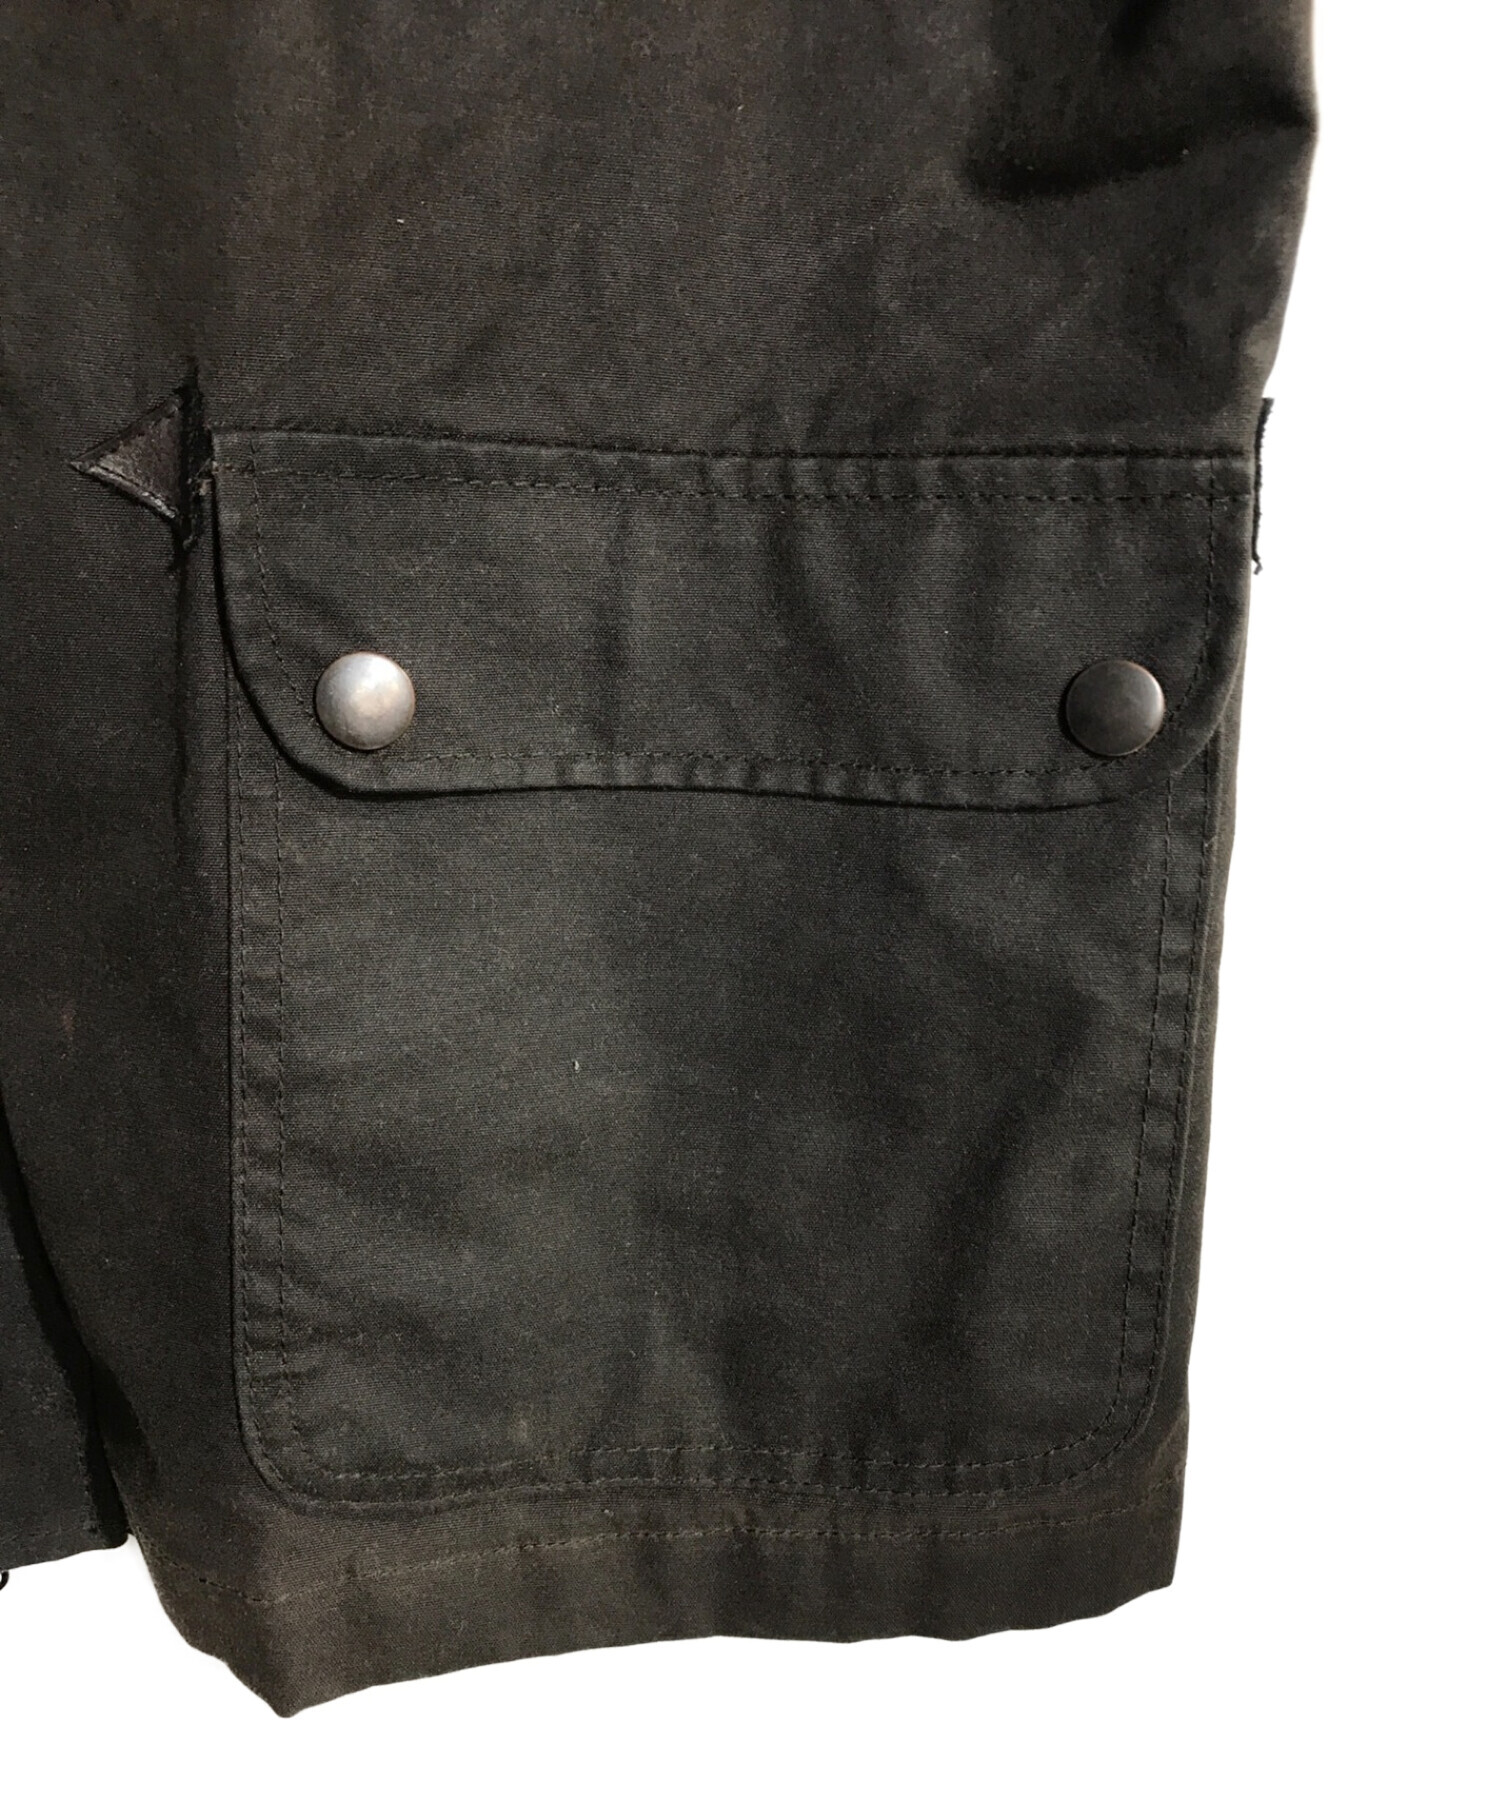 OLD GAP (オールドギャップ) オイルドジャケット ブラウン サイズ:L